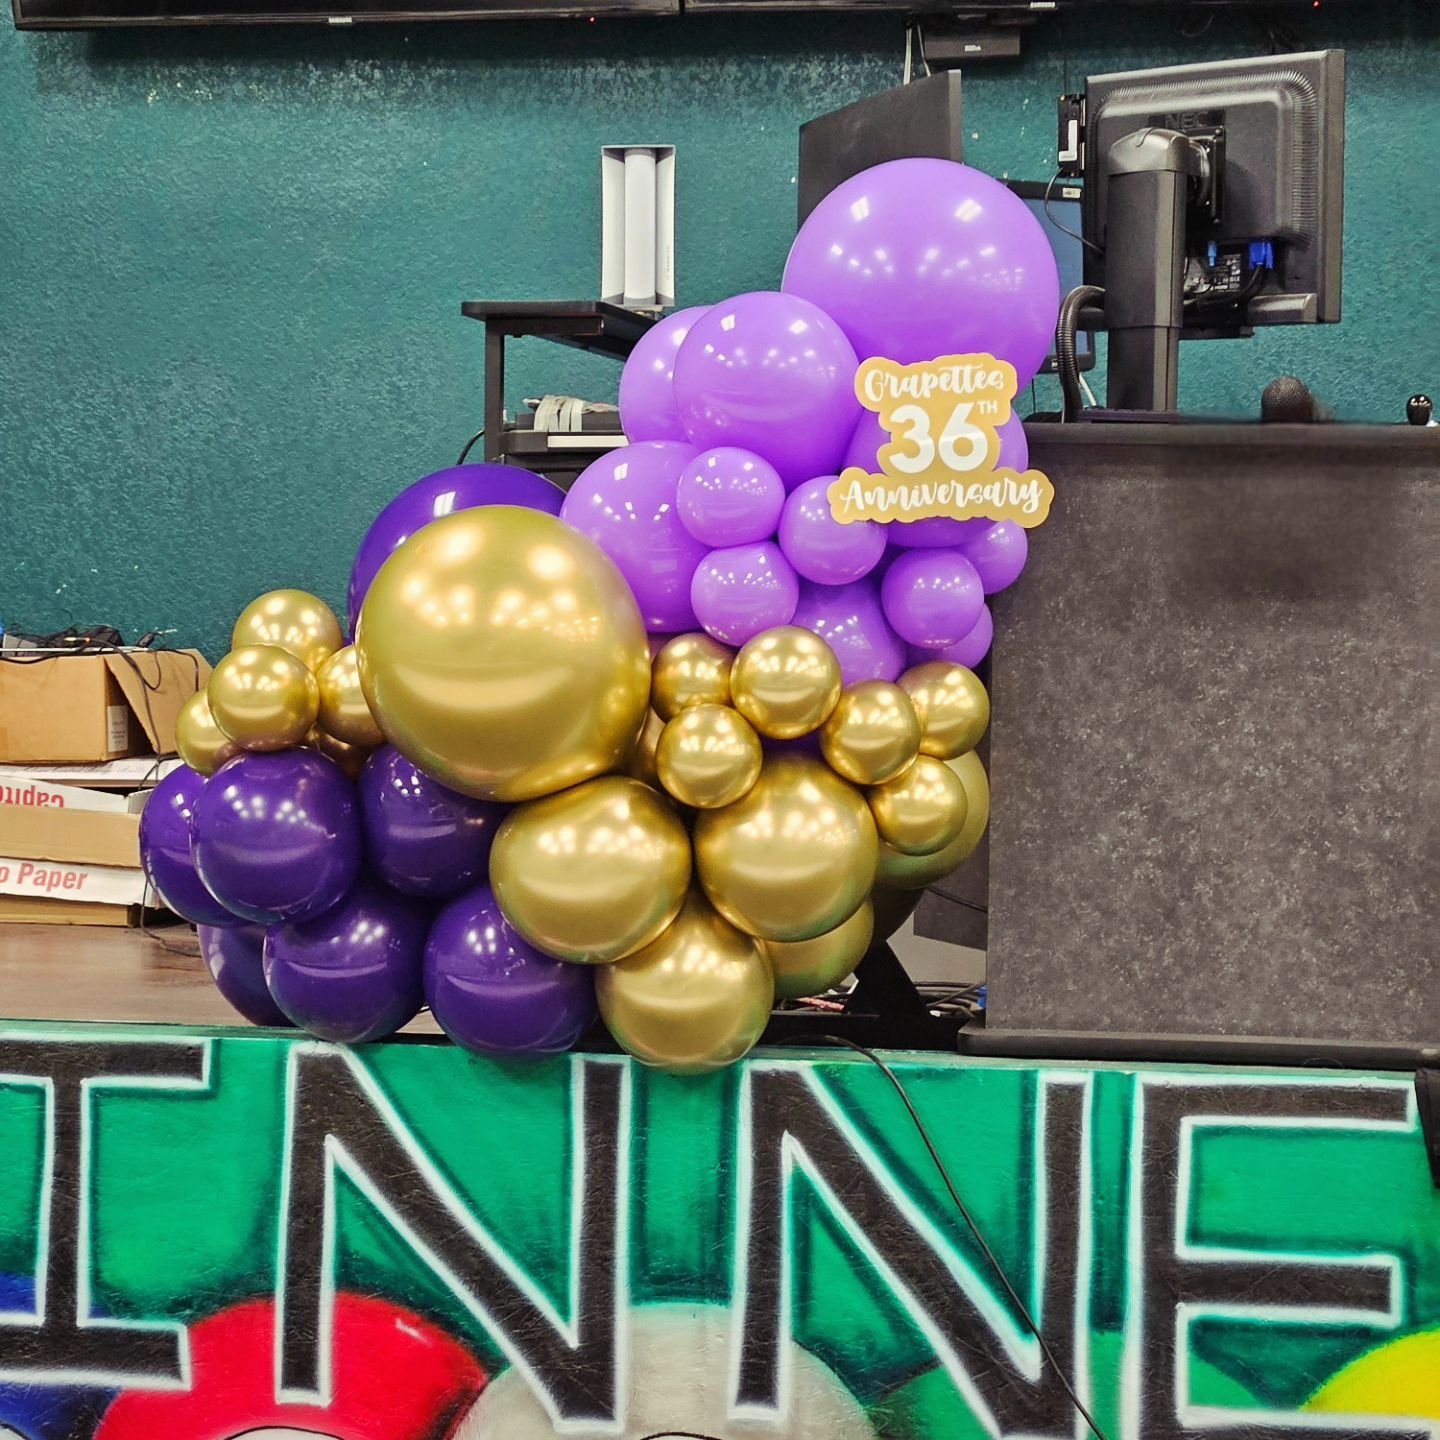 Celebrating 36 years of Grapettes Softball with BINGO at @winnersbingostockton

#balloons #balloondecor #balloongarland #tuftex #professionalballoons #stocktonca #bayareaballoons #purpleandgoldballoons